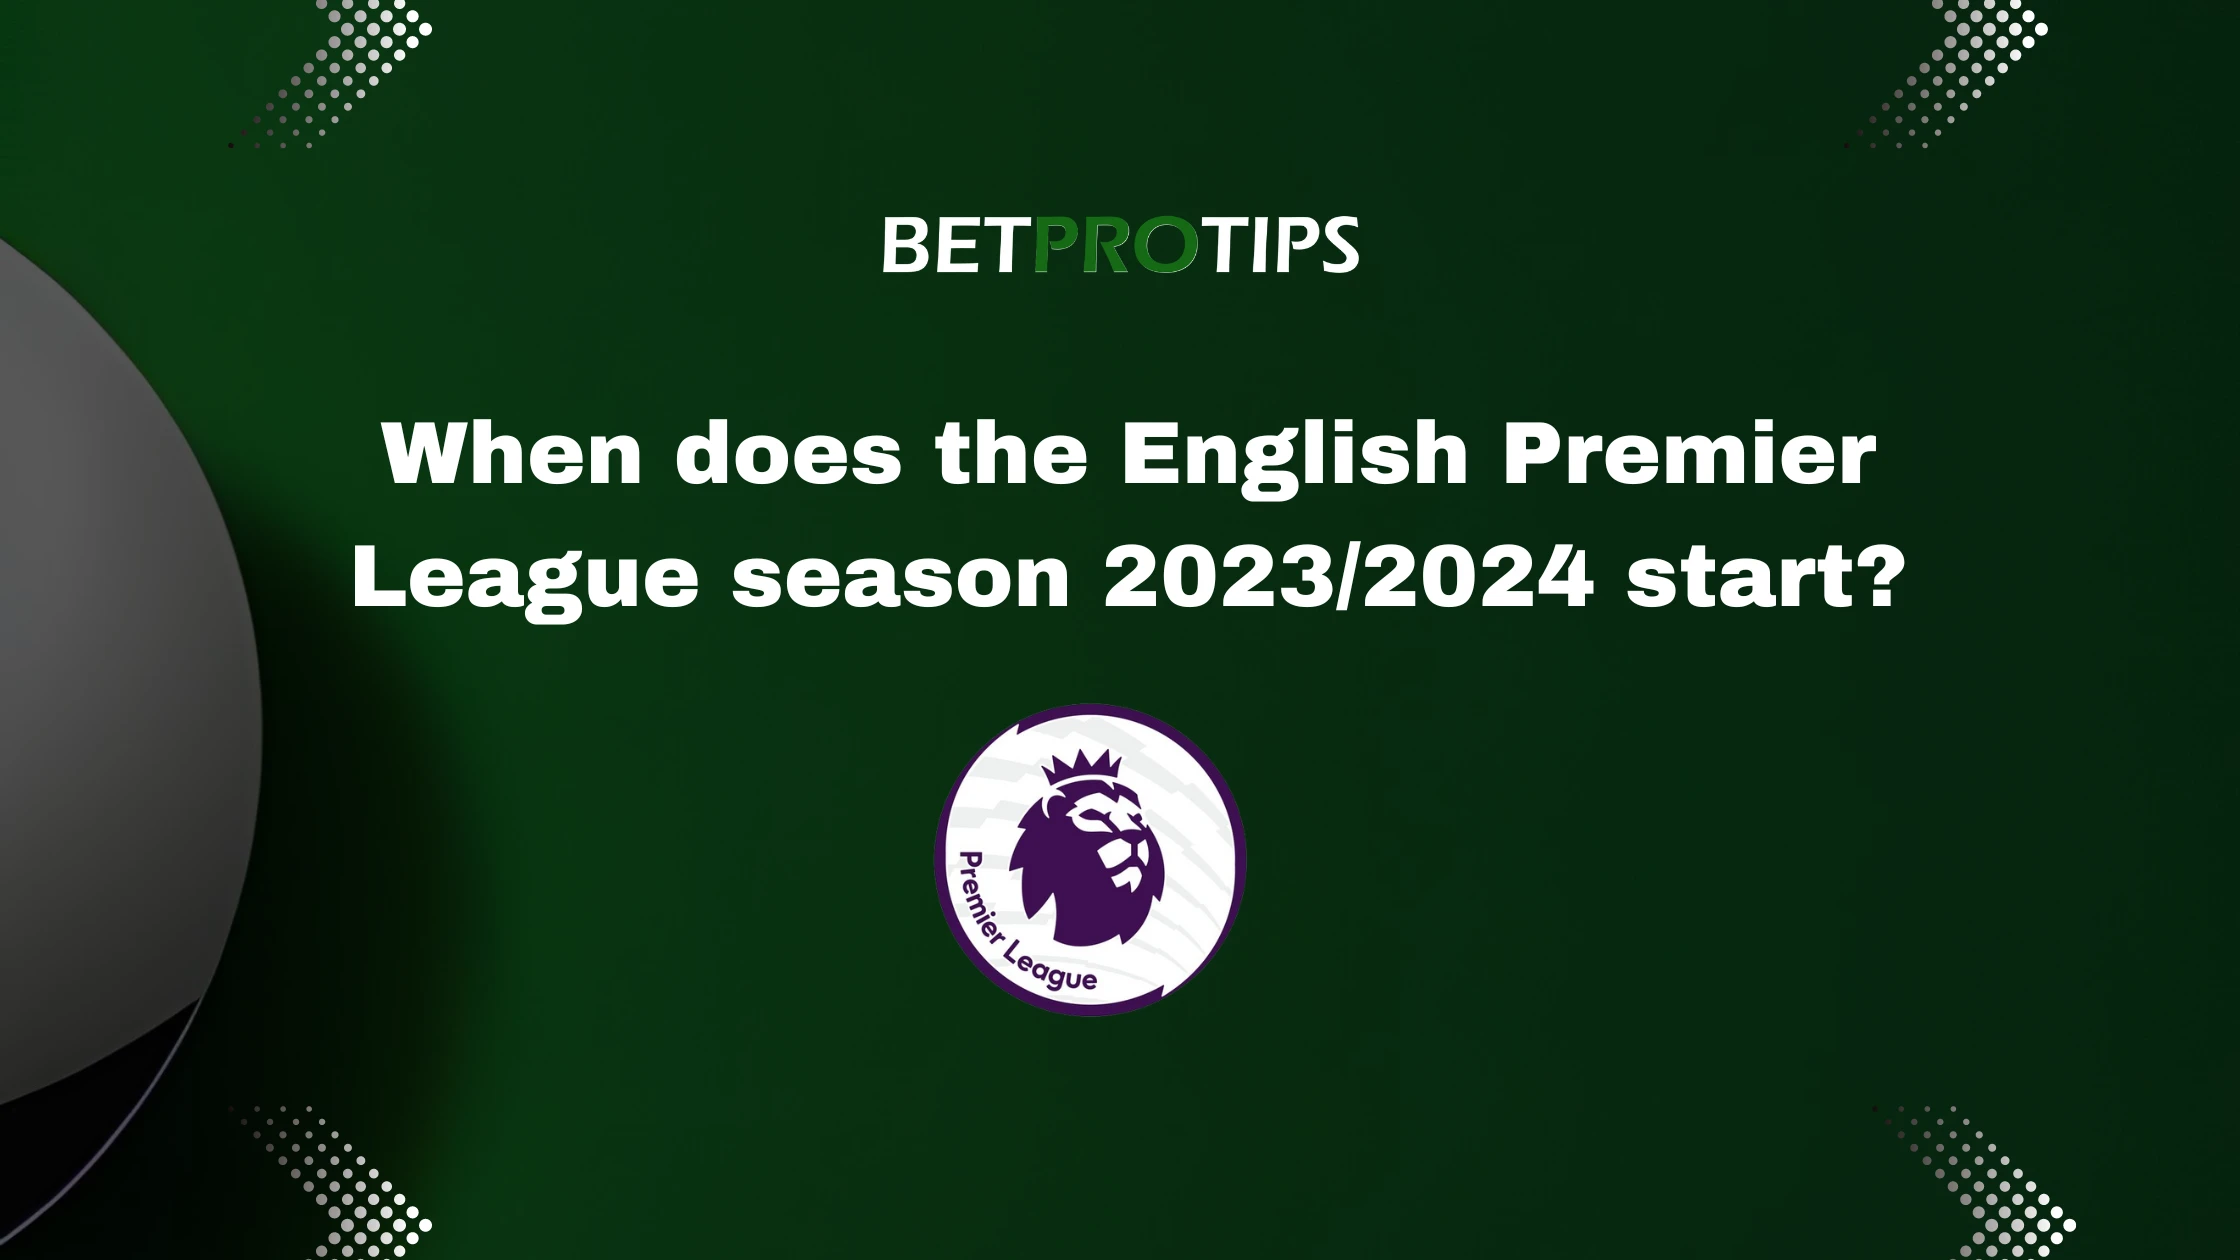 When does the English Premier League season 2023/2024 start?